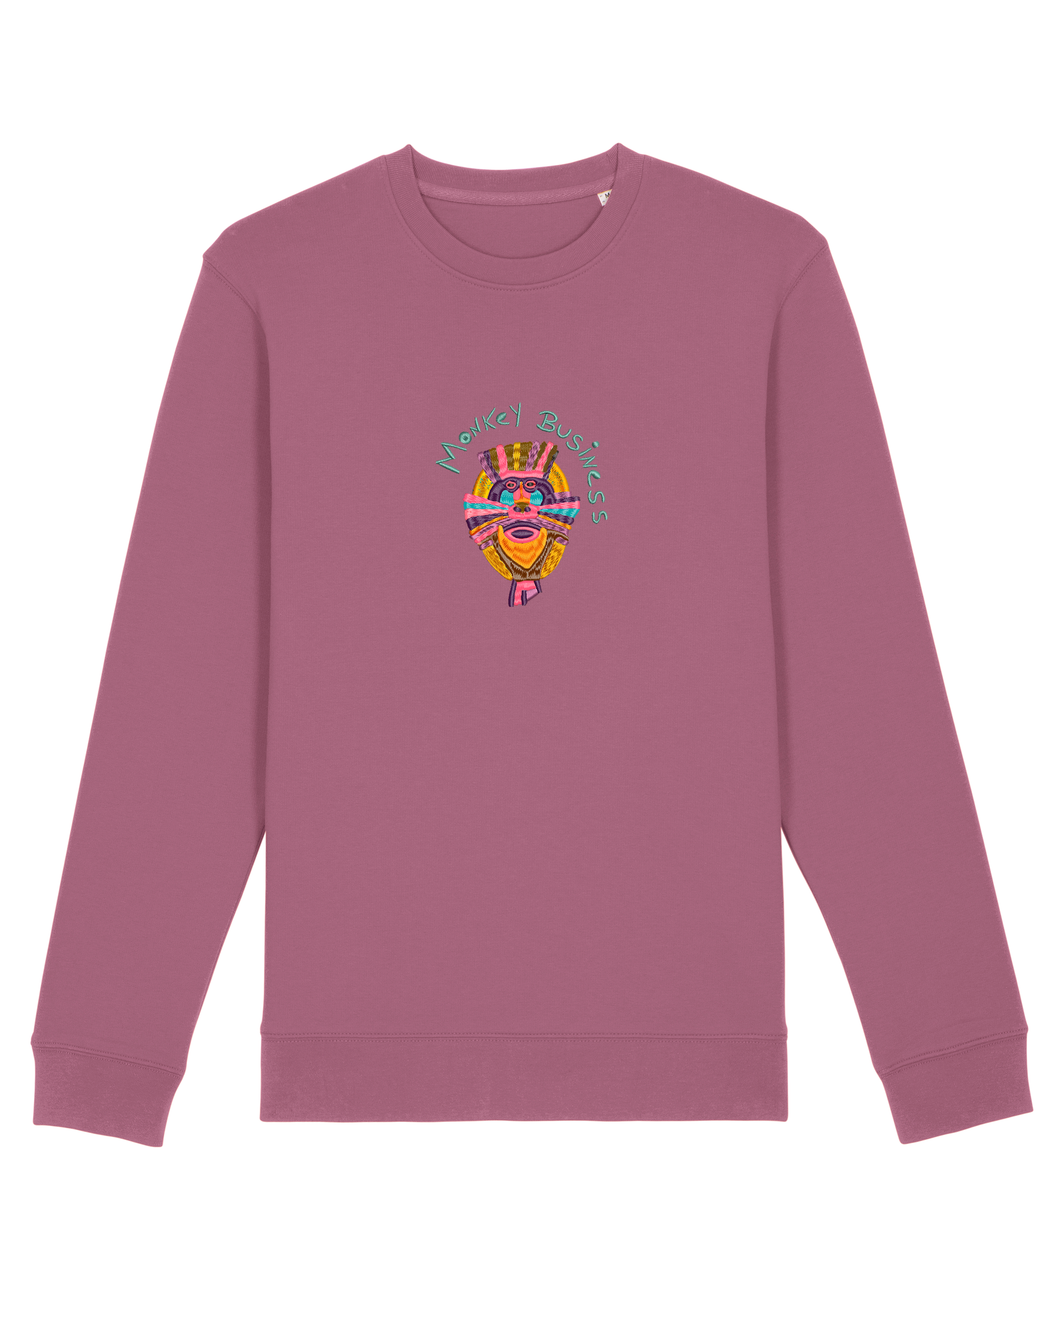 MONKEY BUSINESS 🐵- Embroidered UNISEX CREW NECK Sweatshirt -OUTLET🔴